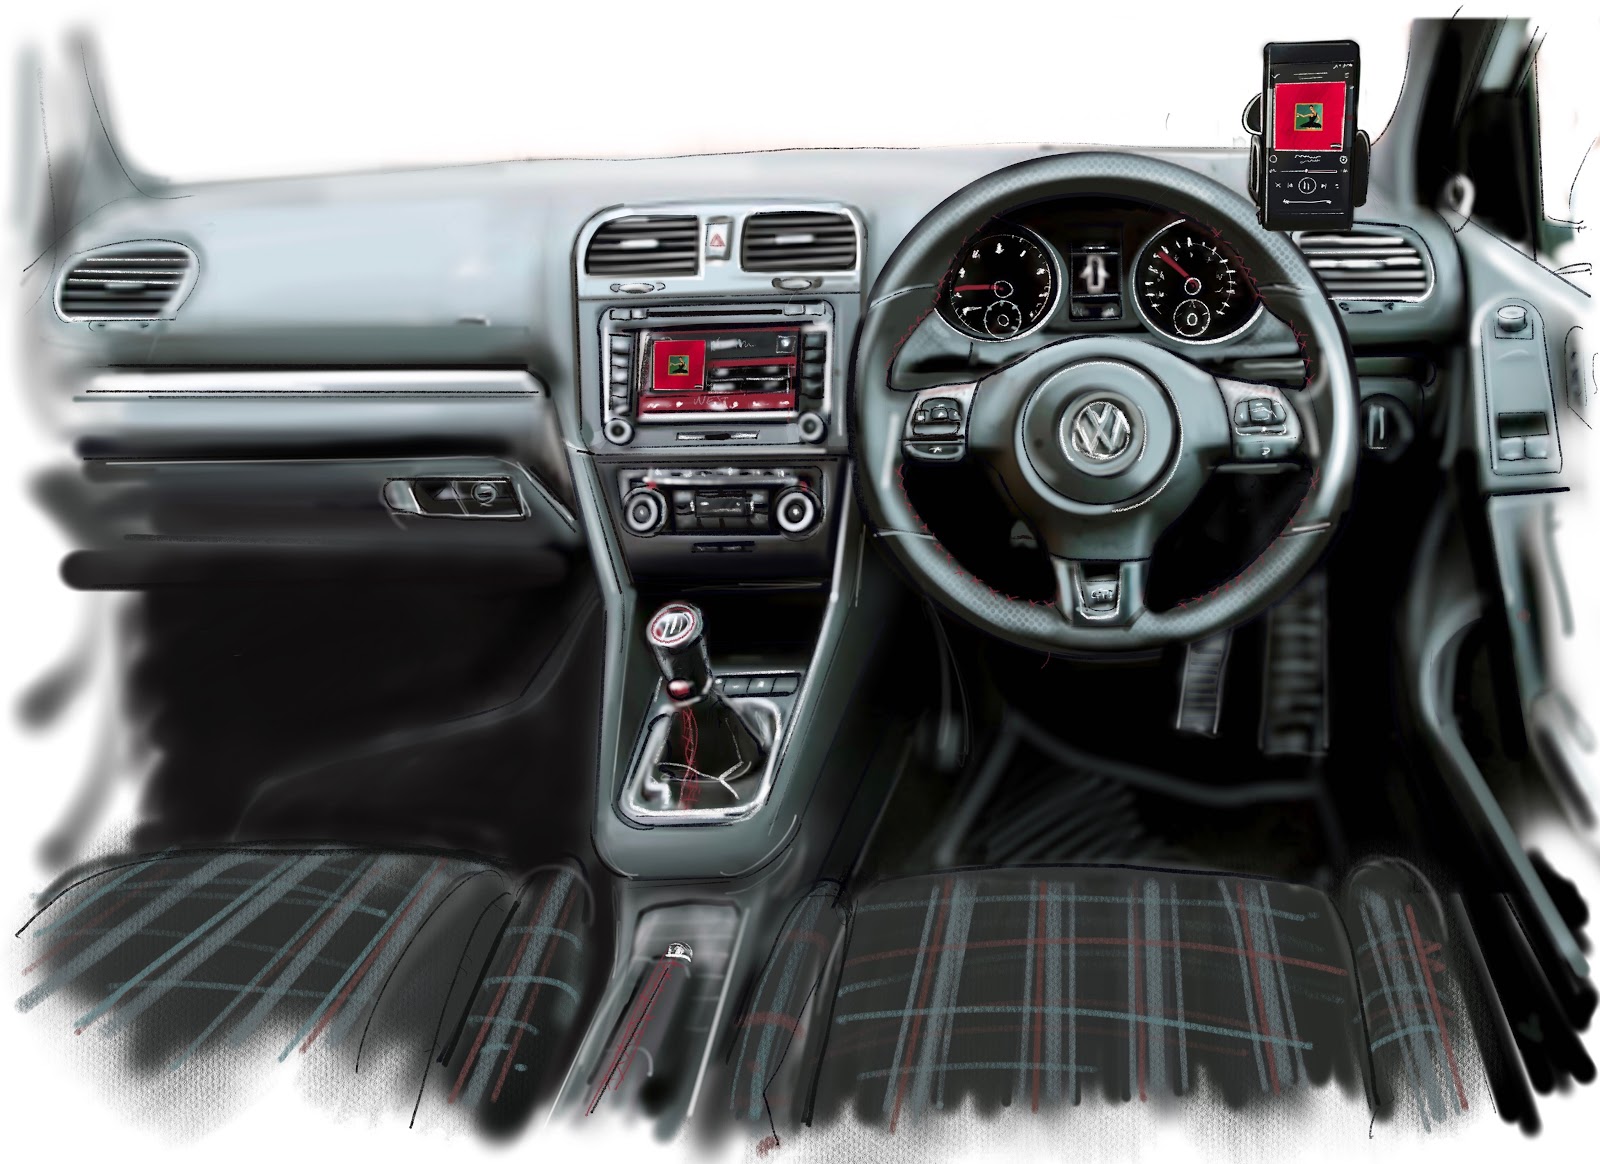 Evolution of the Volkswagen Golf interior 1974-2020